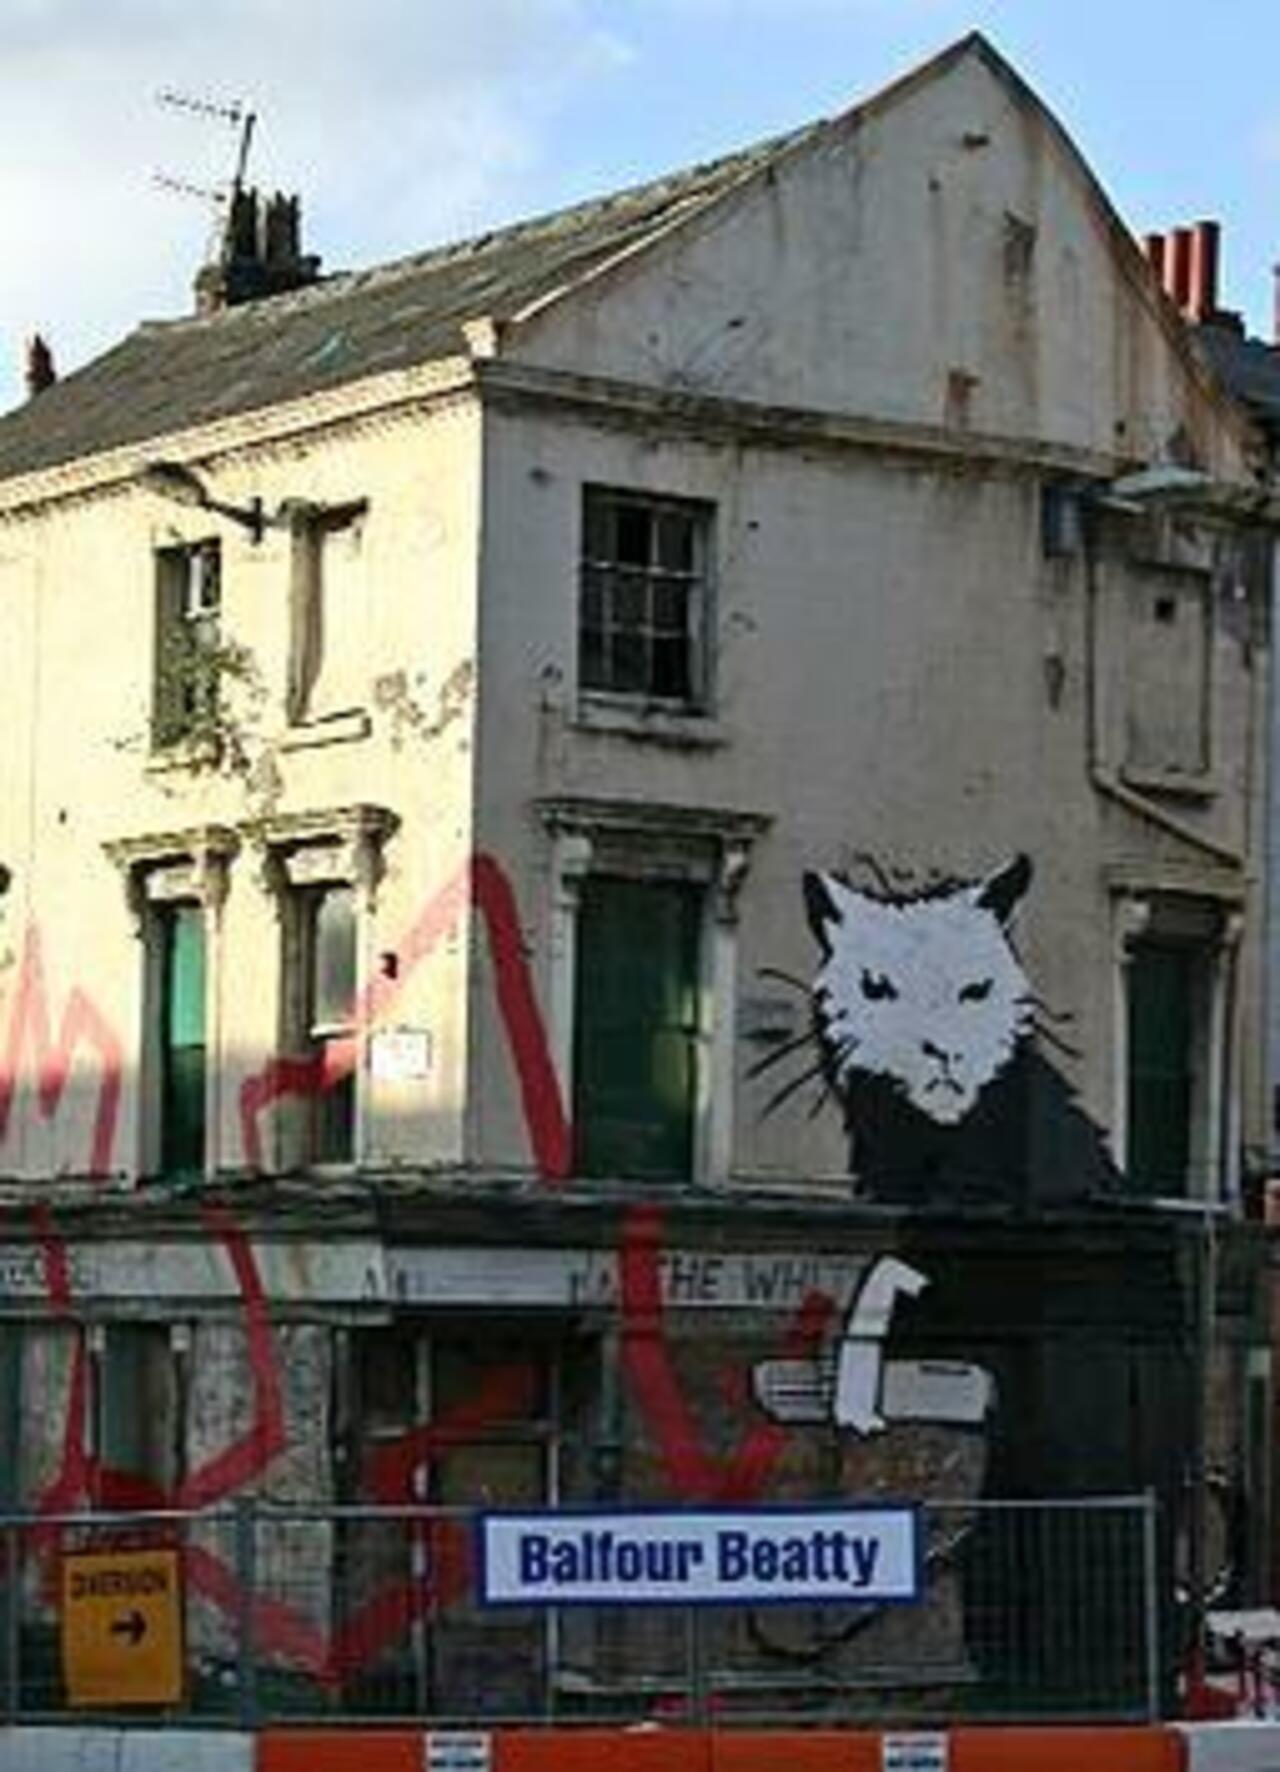 “@Pitchuskita: Graffiti atribuido a Banksy
Liverpool, Inglaterra.

#streetart #art #graffiti #urbanart http://t.co/fcVWR2awEQ”